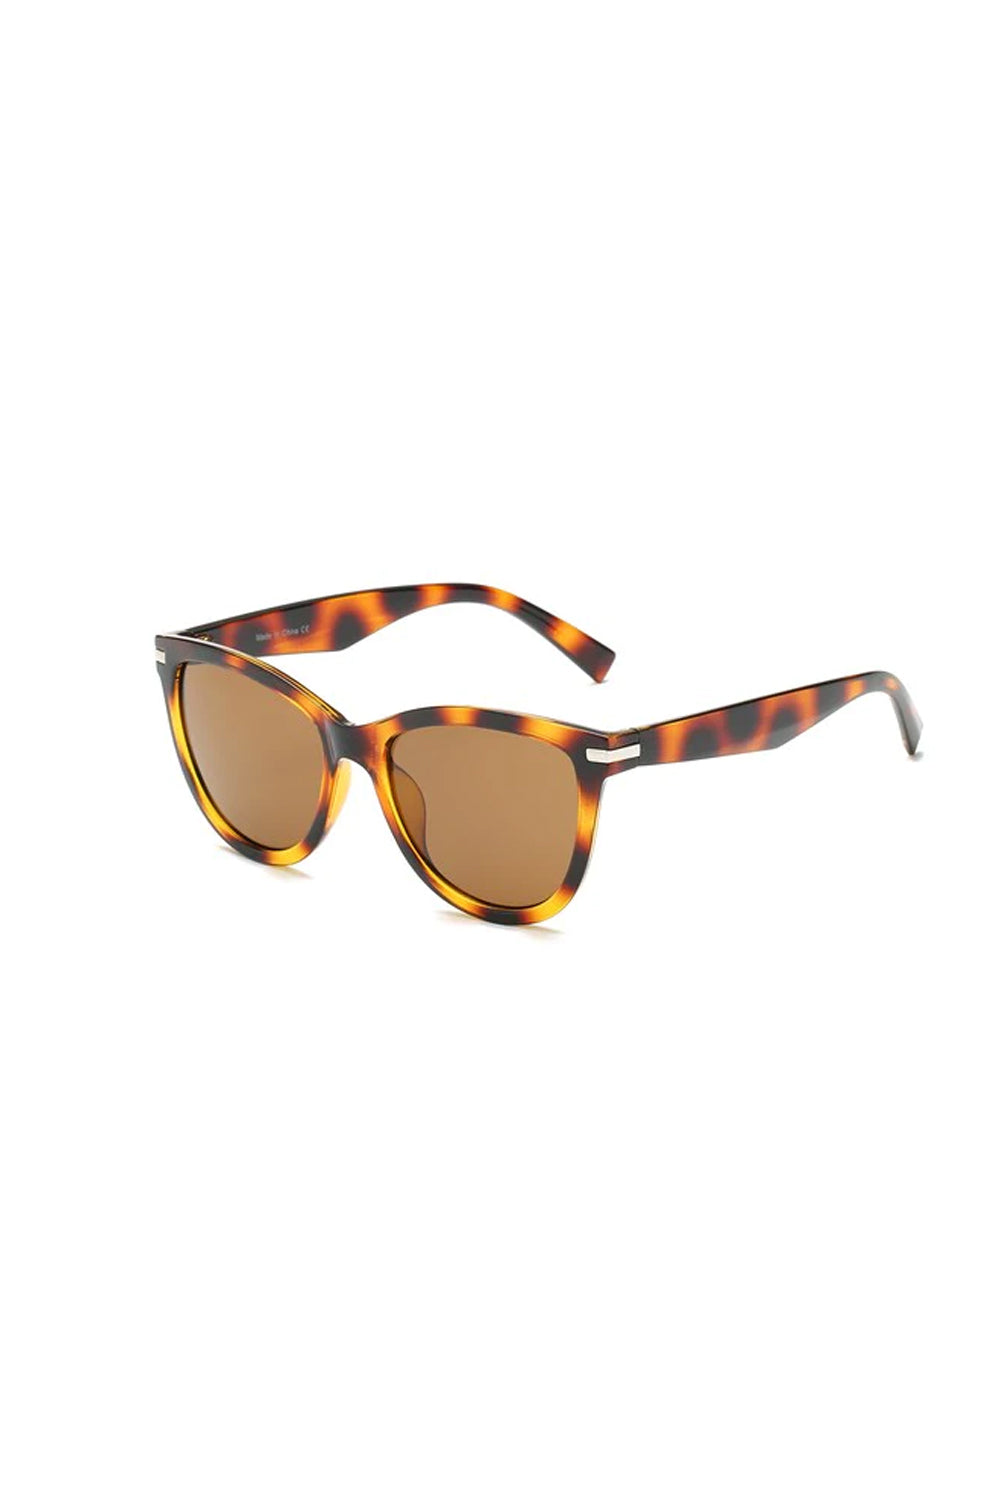 Women's Cat Eye Fashion Sunglasses - Black